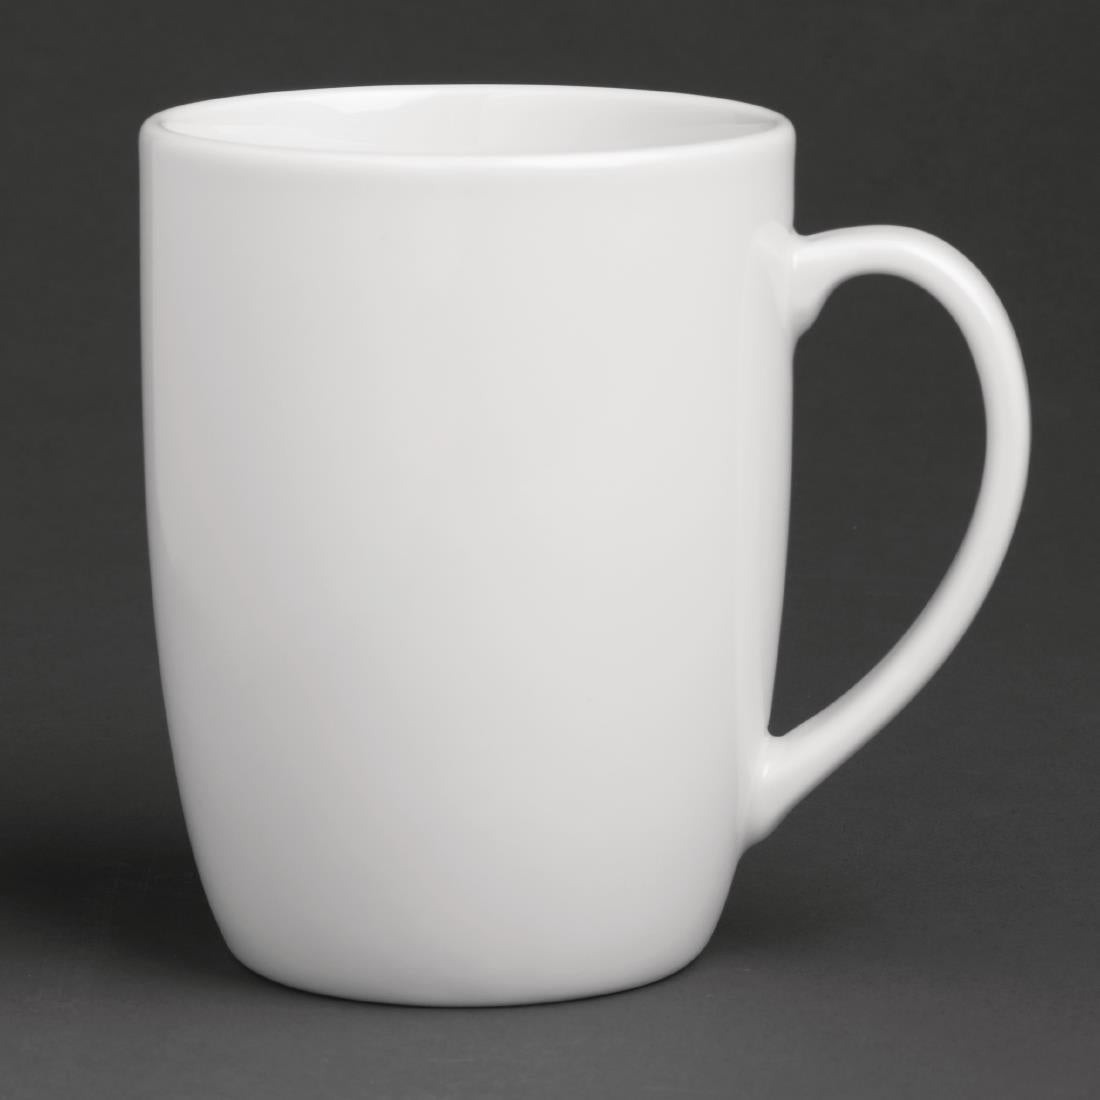 Royal Porcelain Classic White Mug 350ml (Pack of 12)